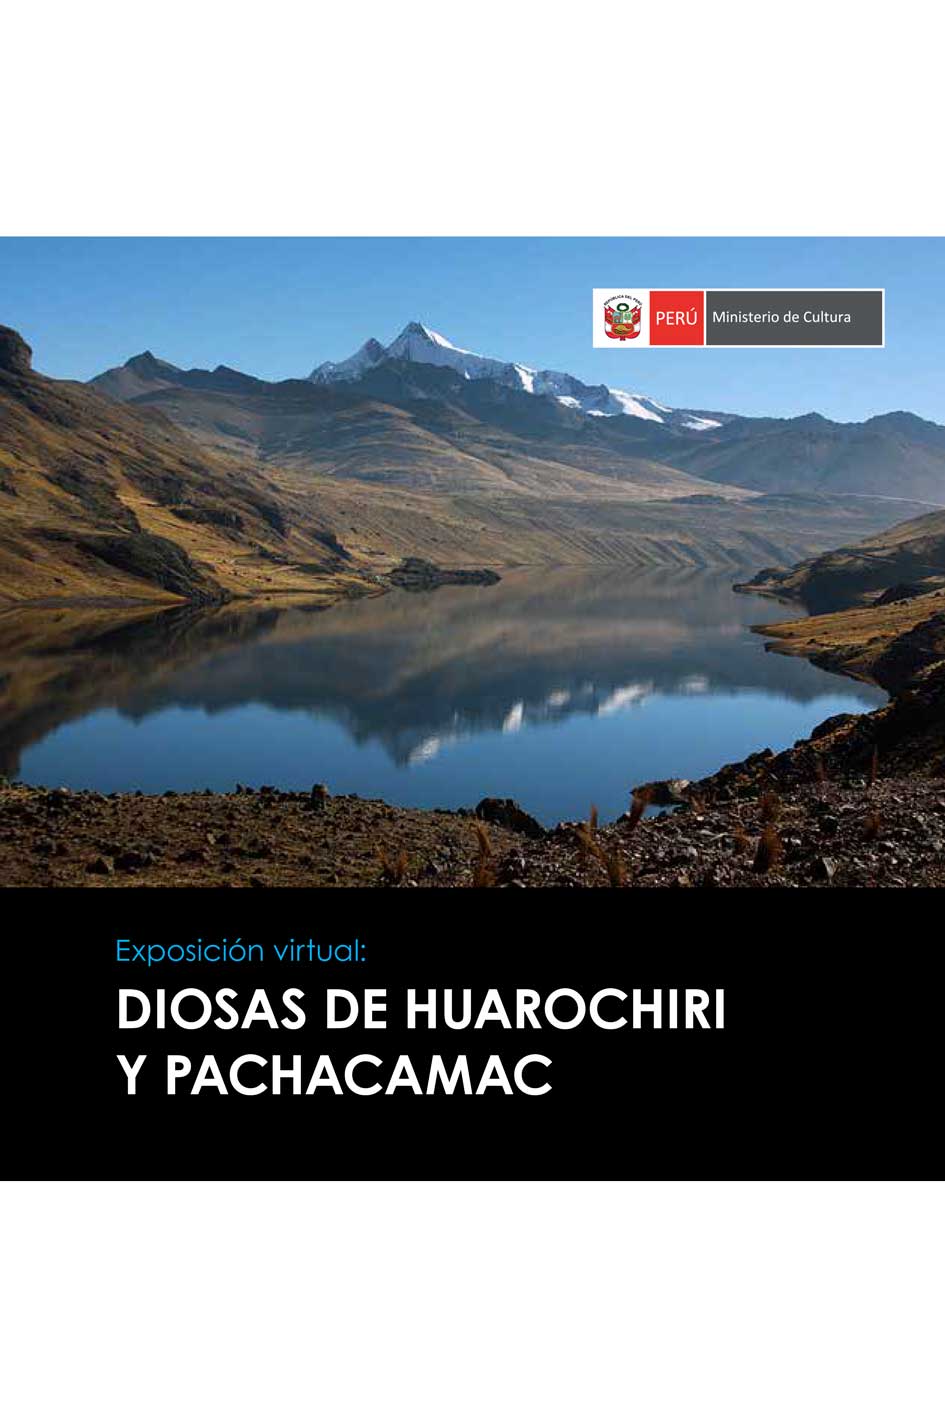 Exposición virtual: Diosas de Huarochirí y Pachacamac